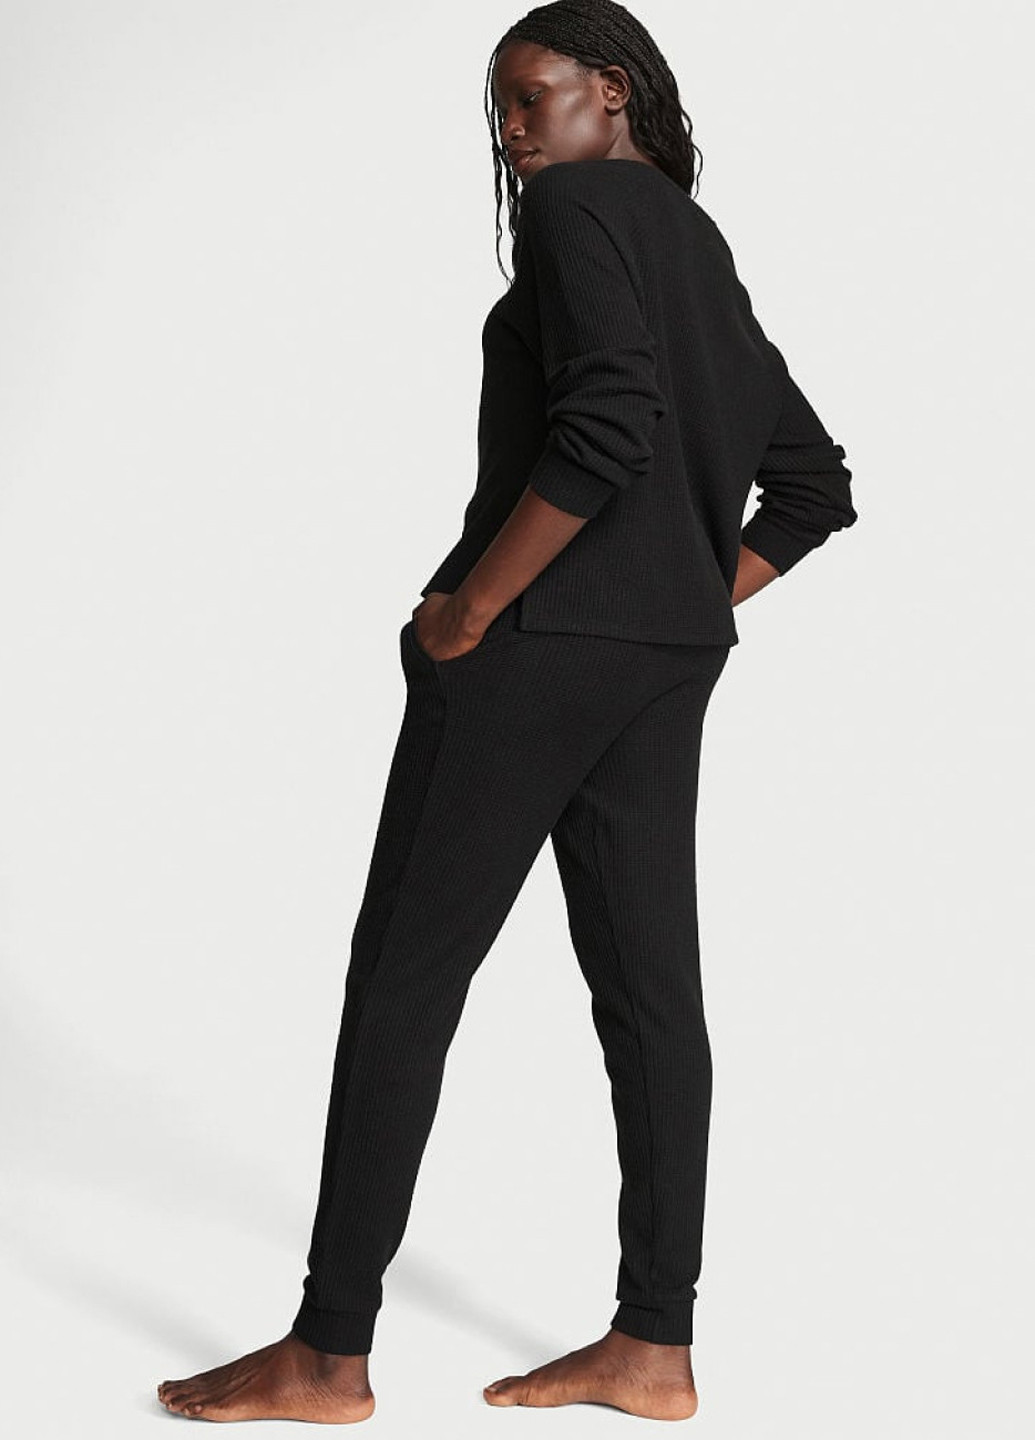 Черная всесезон пижама (кофта, брюки) кофта + брюки Victoria's Secret